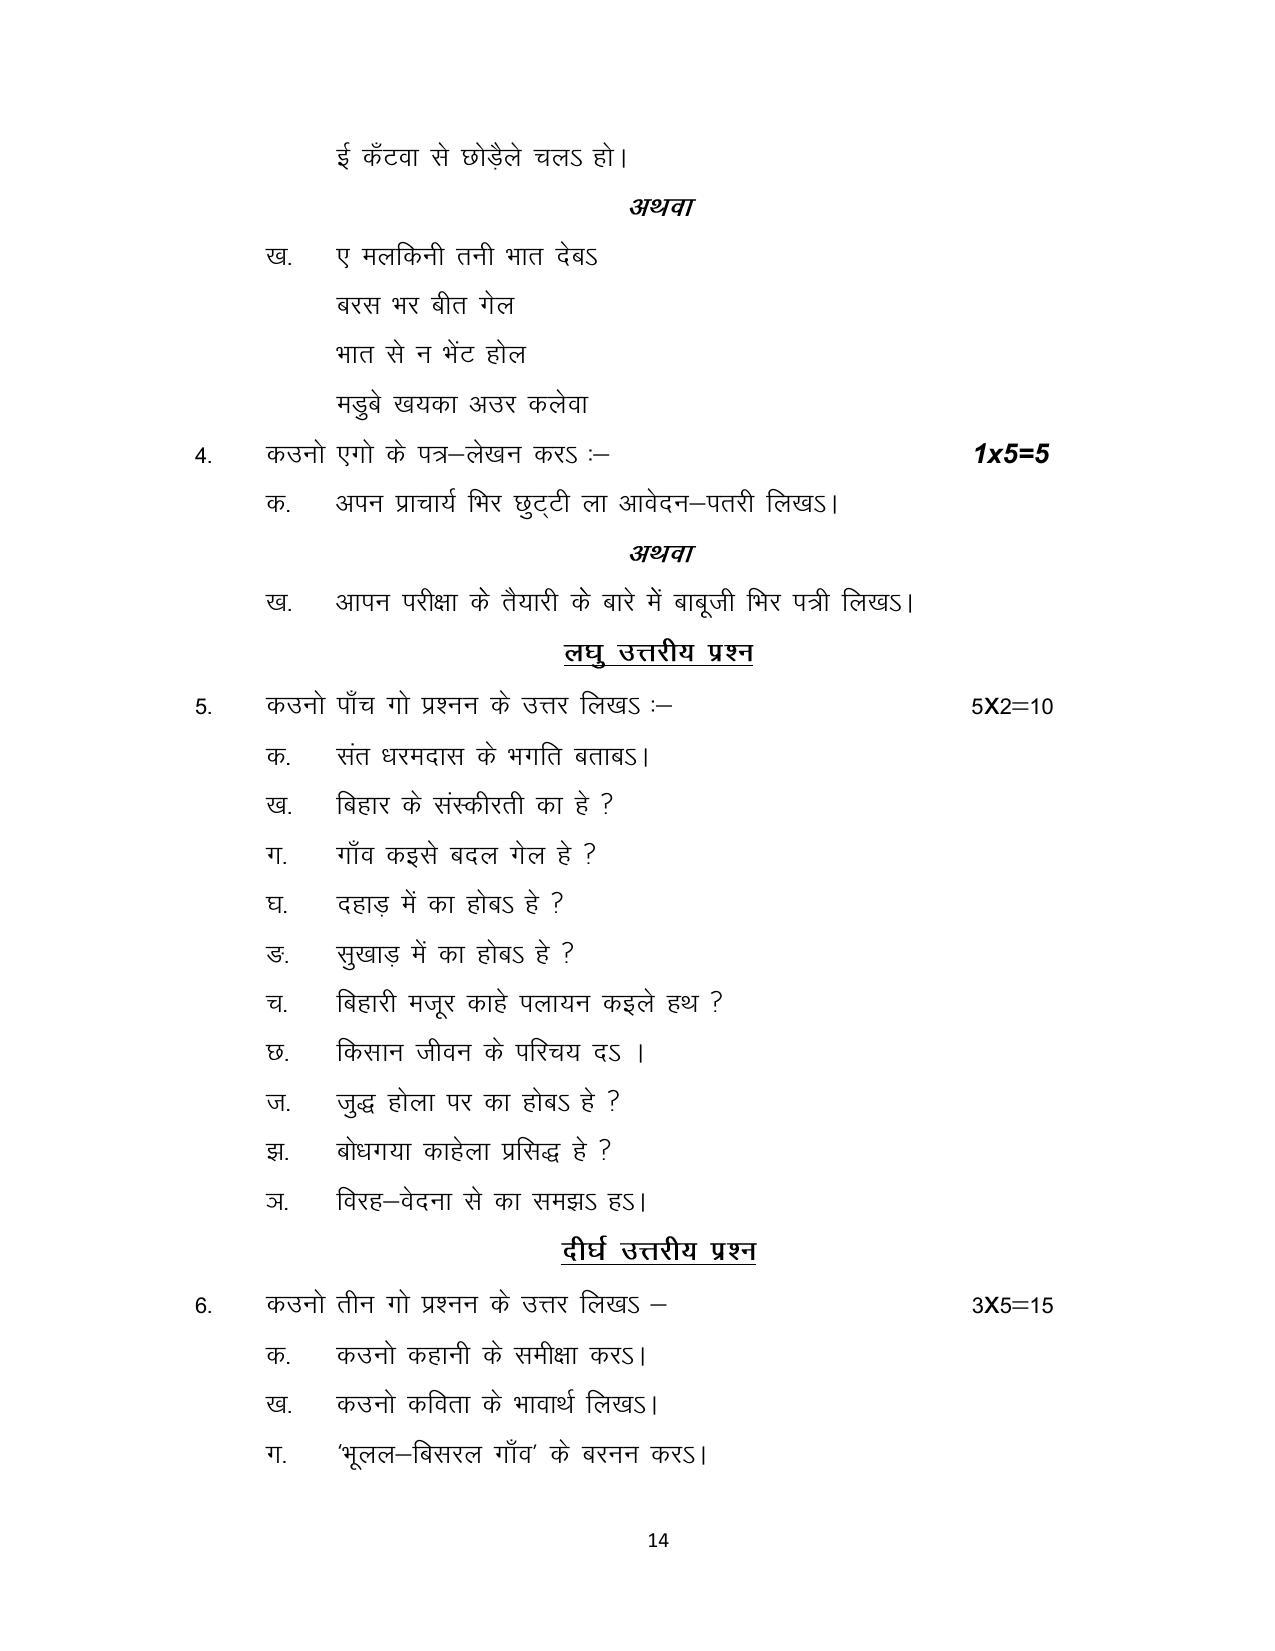 Bihar Board Class 12 Magahi Model Paper - Page 14